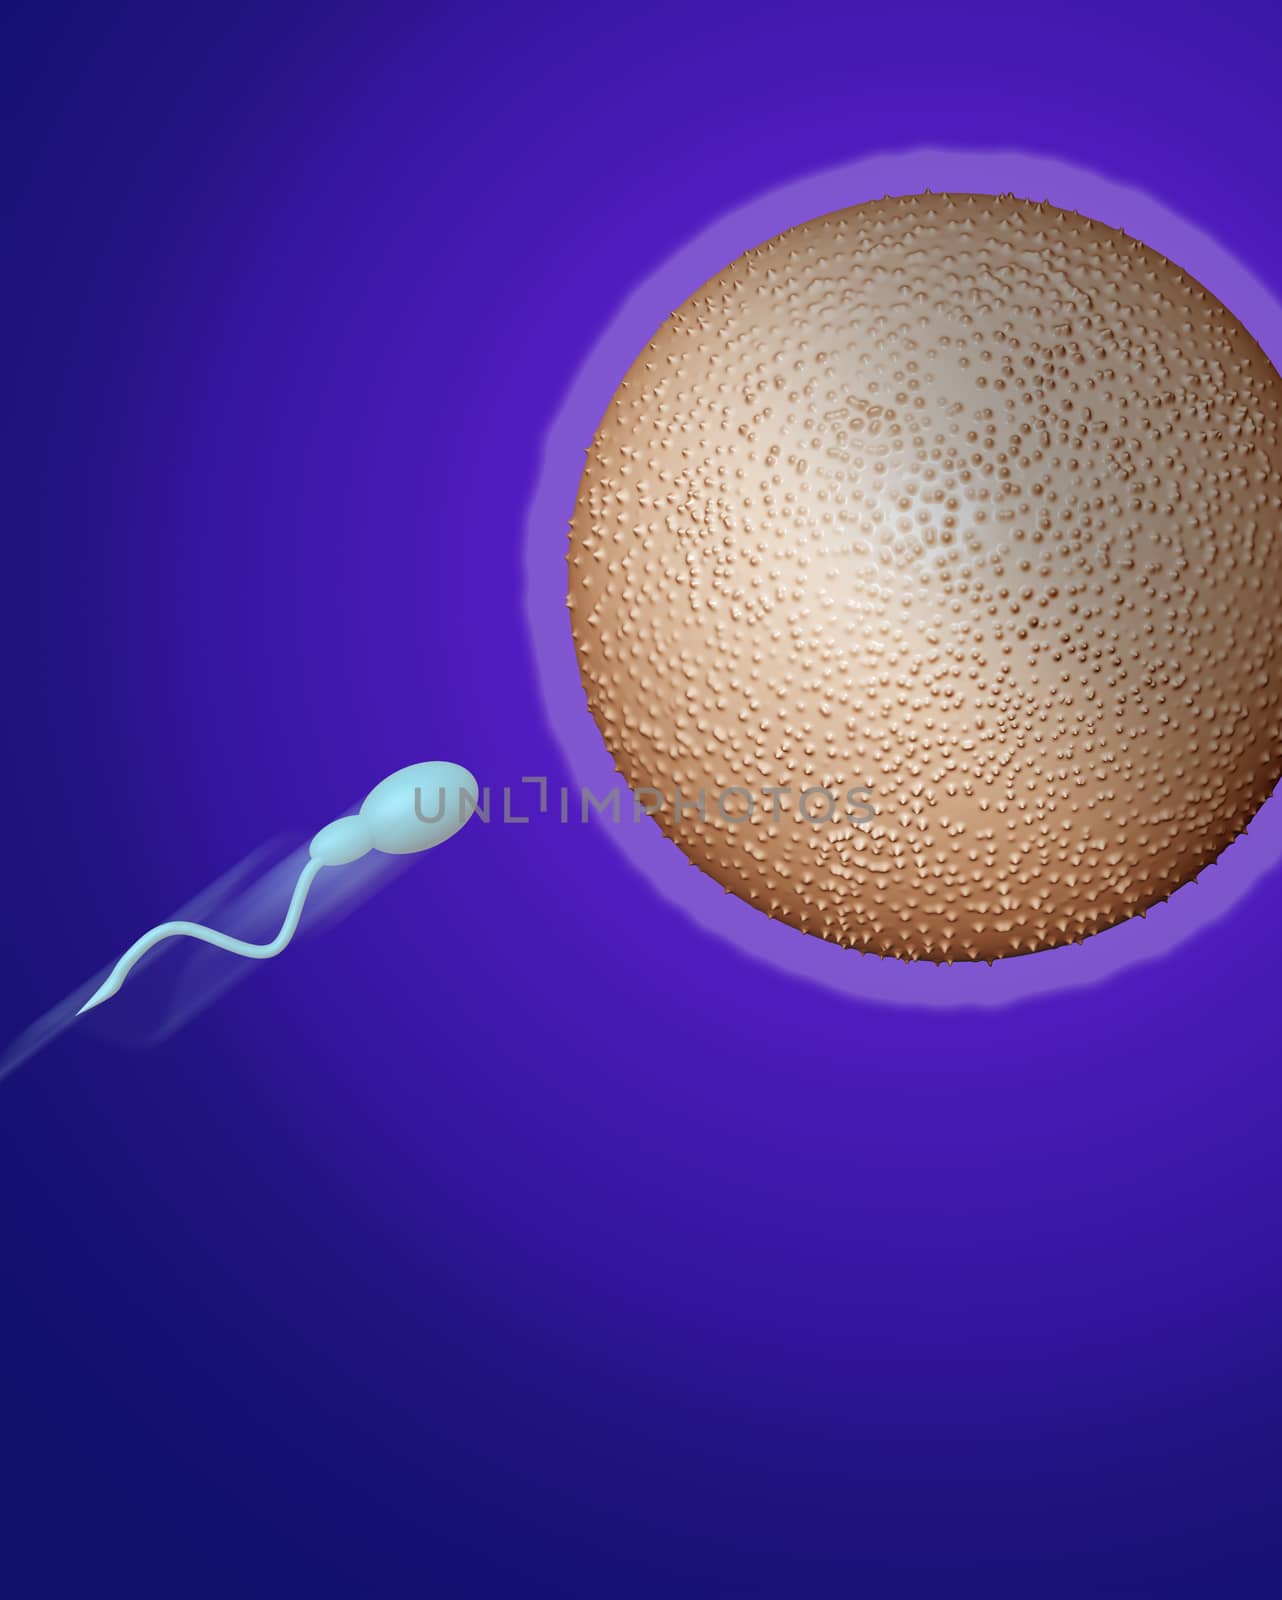 sperm heading towards egg by vitanovski